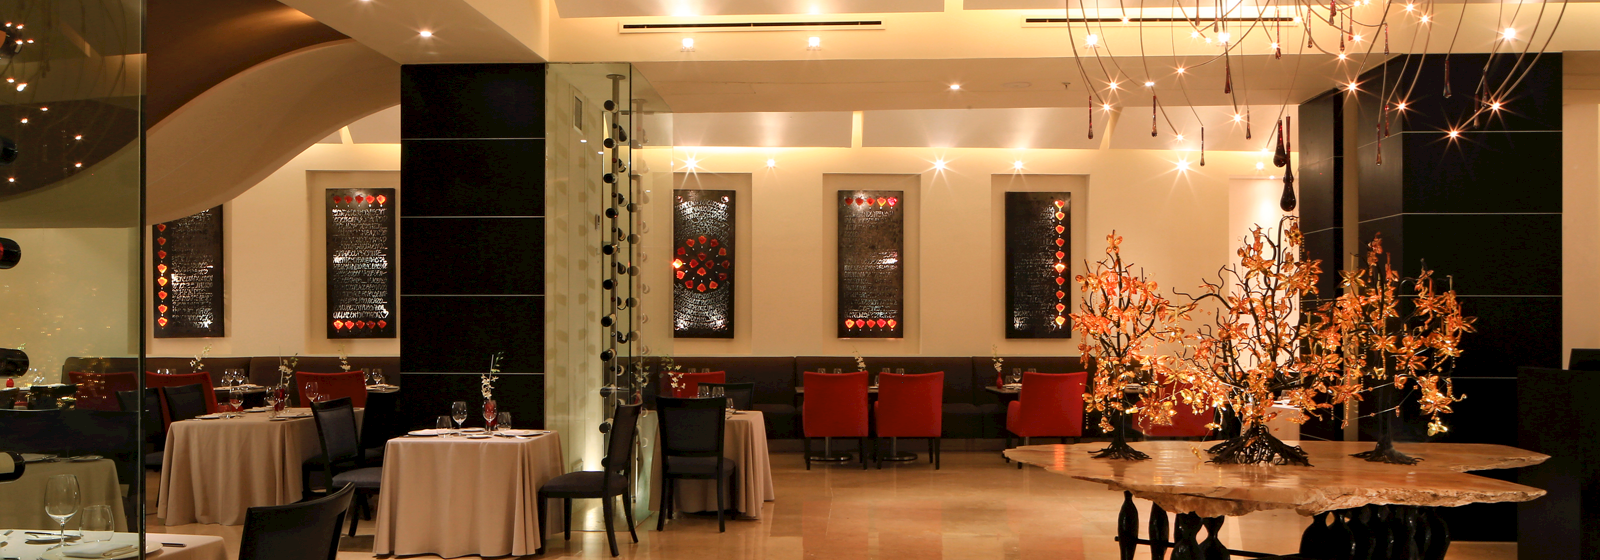 Piaf Restaurant of Grand Velas Riviera Nayarit